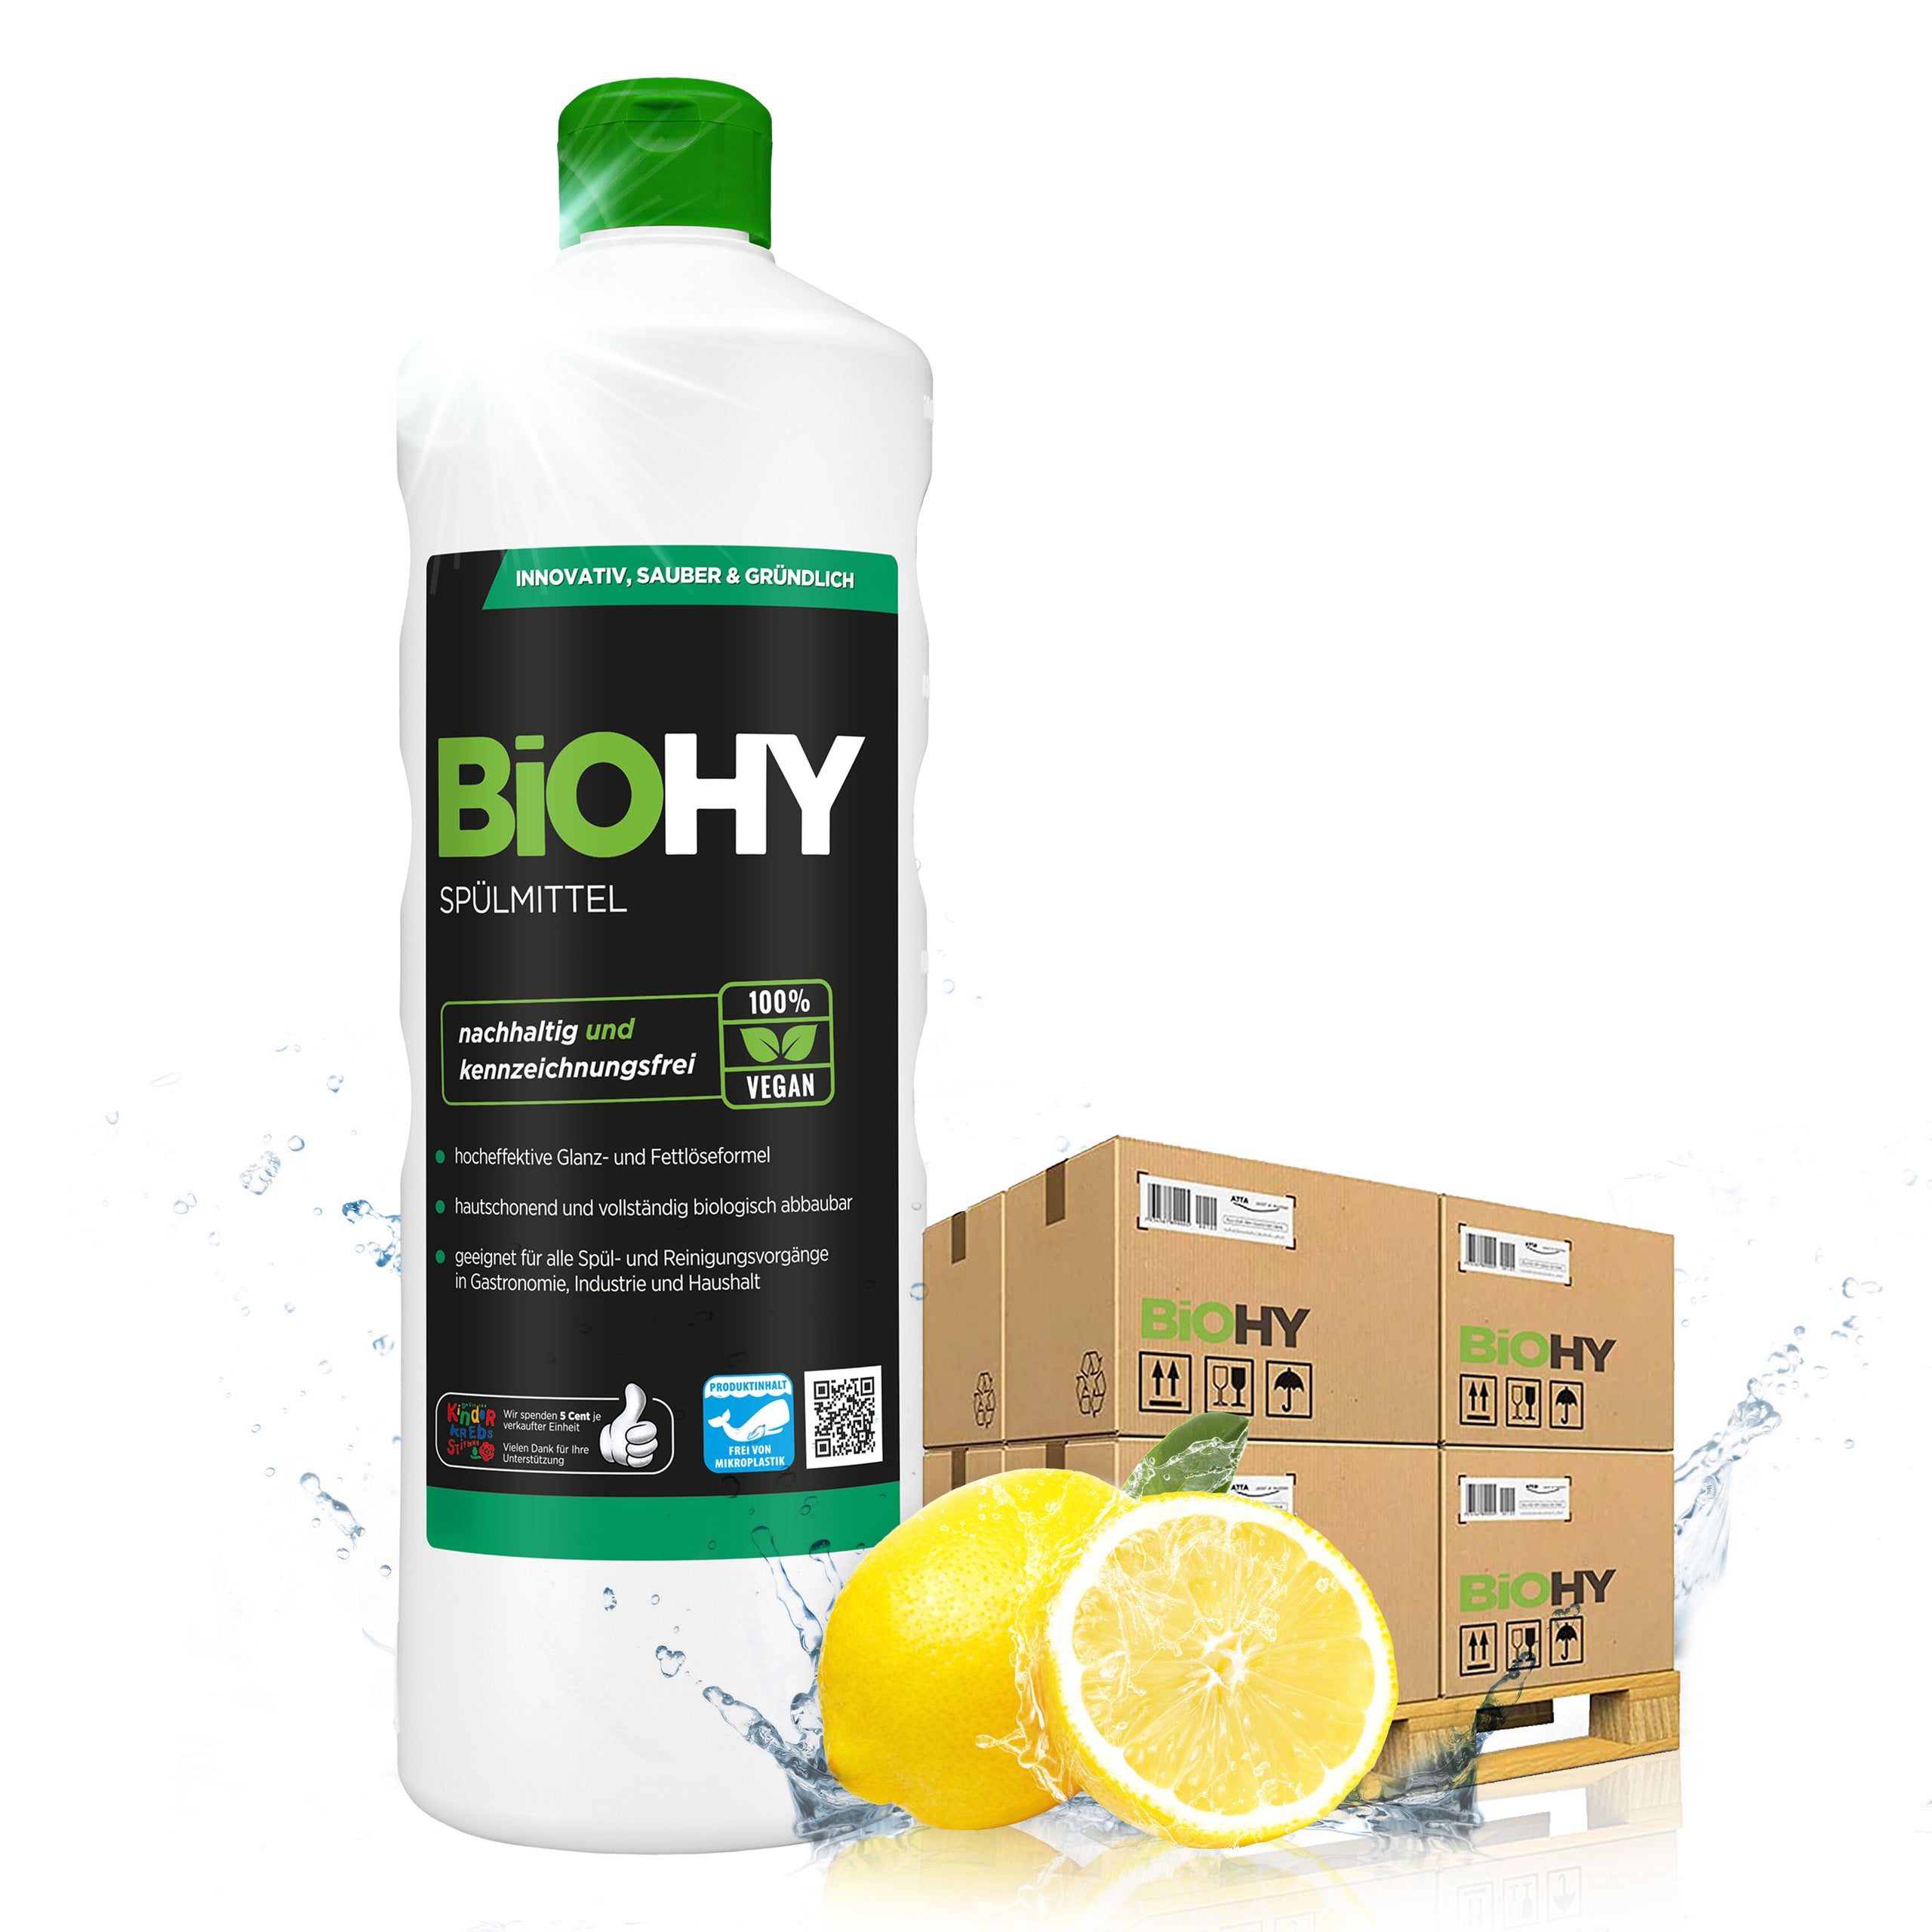 BiOHY washing-up liquid, dishwashing liquid, hand washing-up liquid, dishwashing detergent, B2B